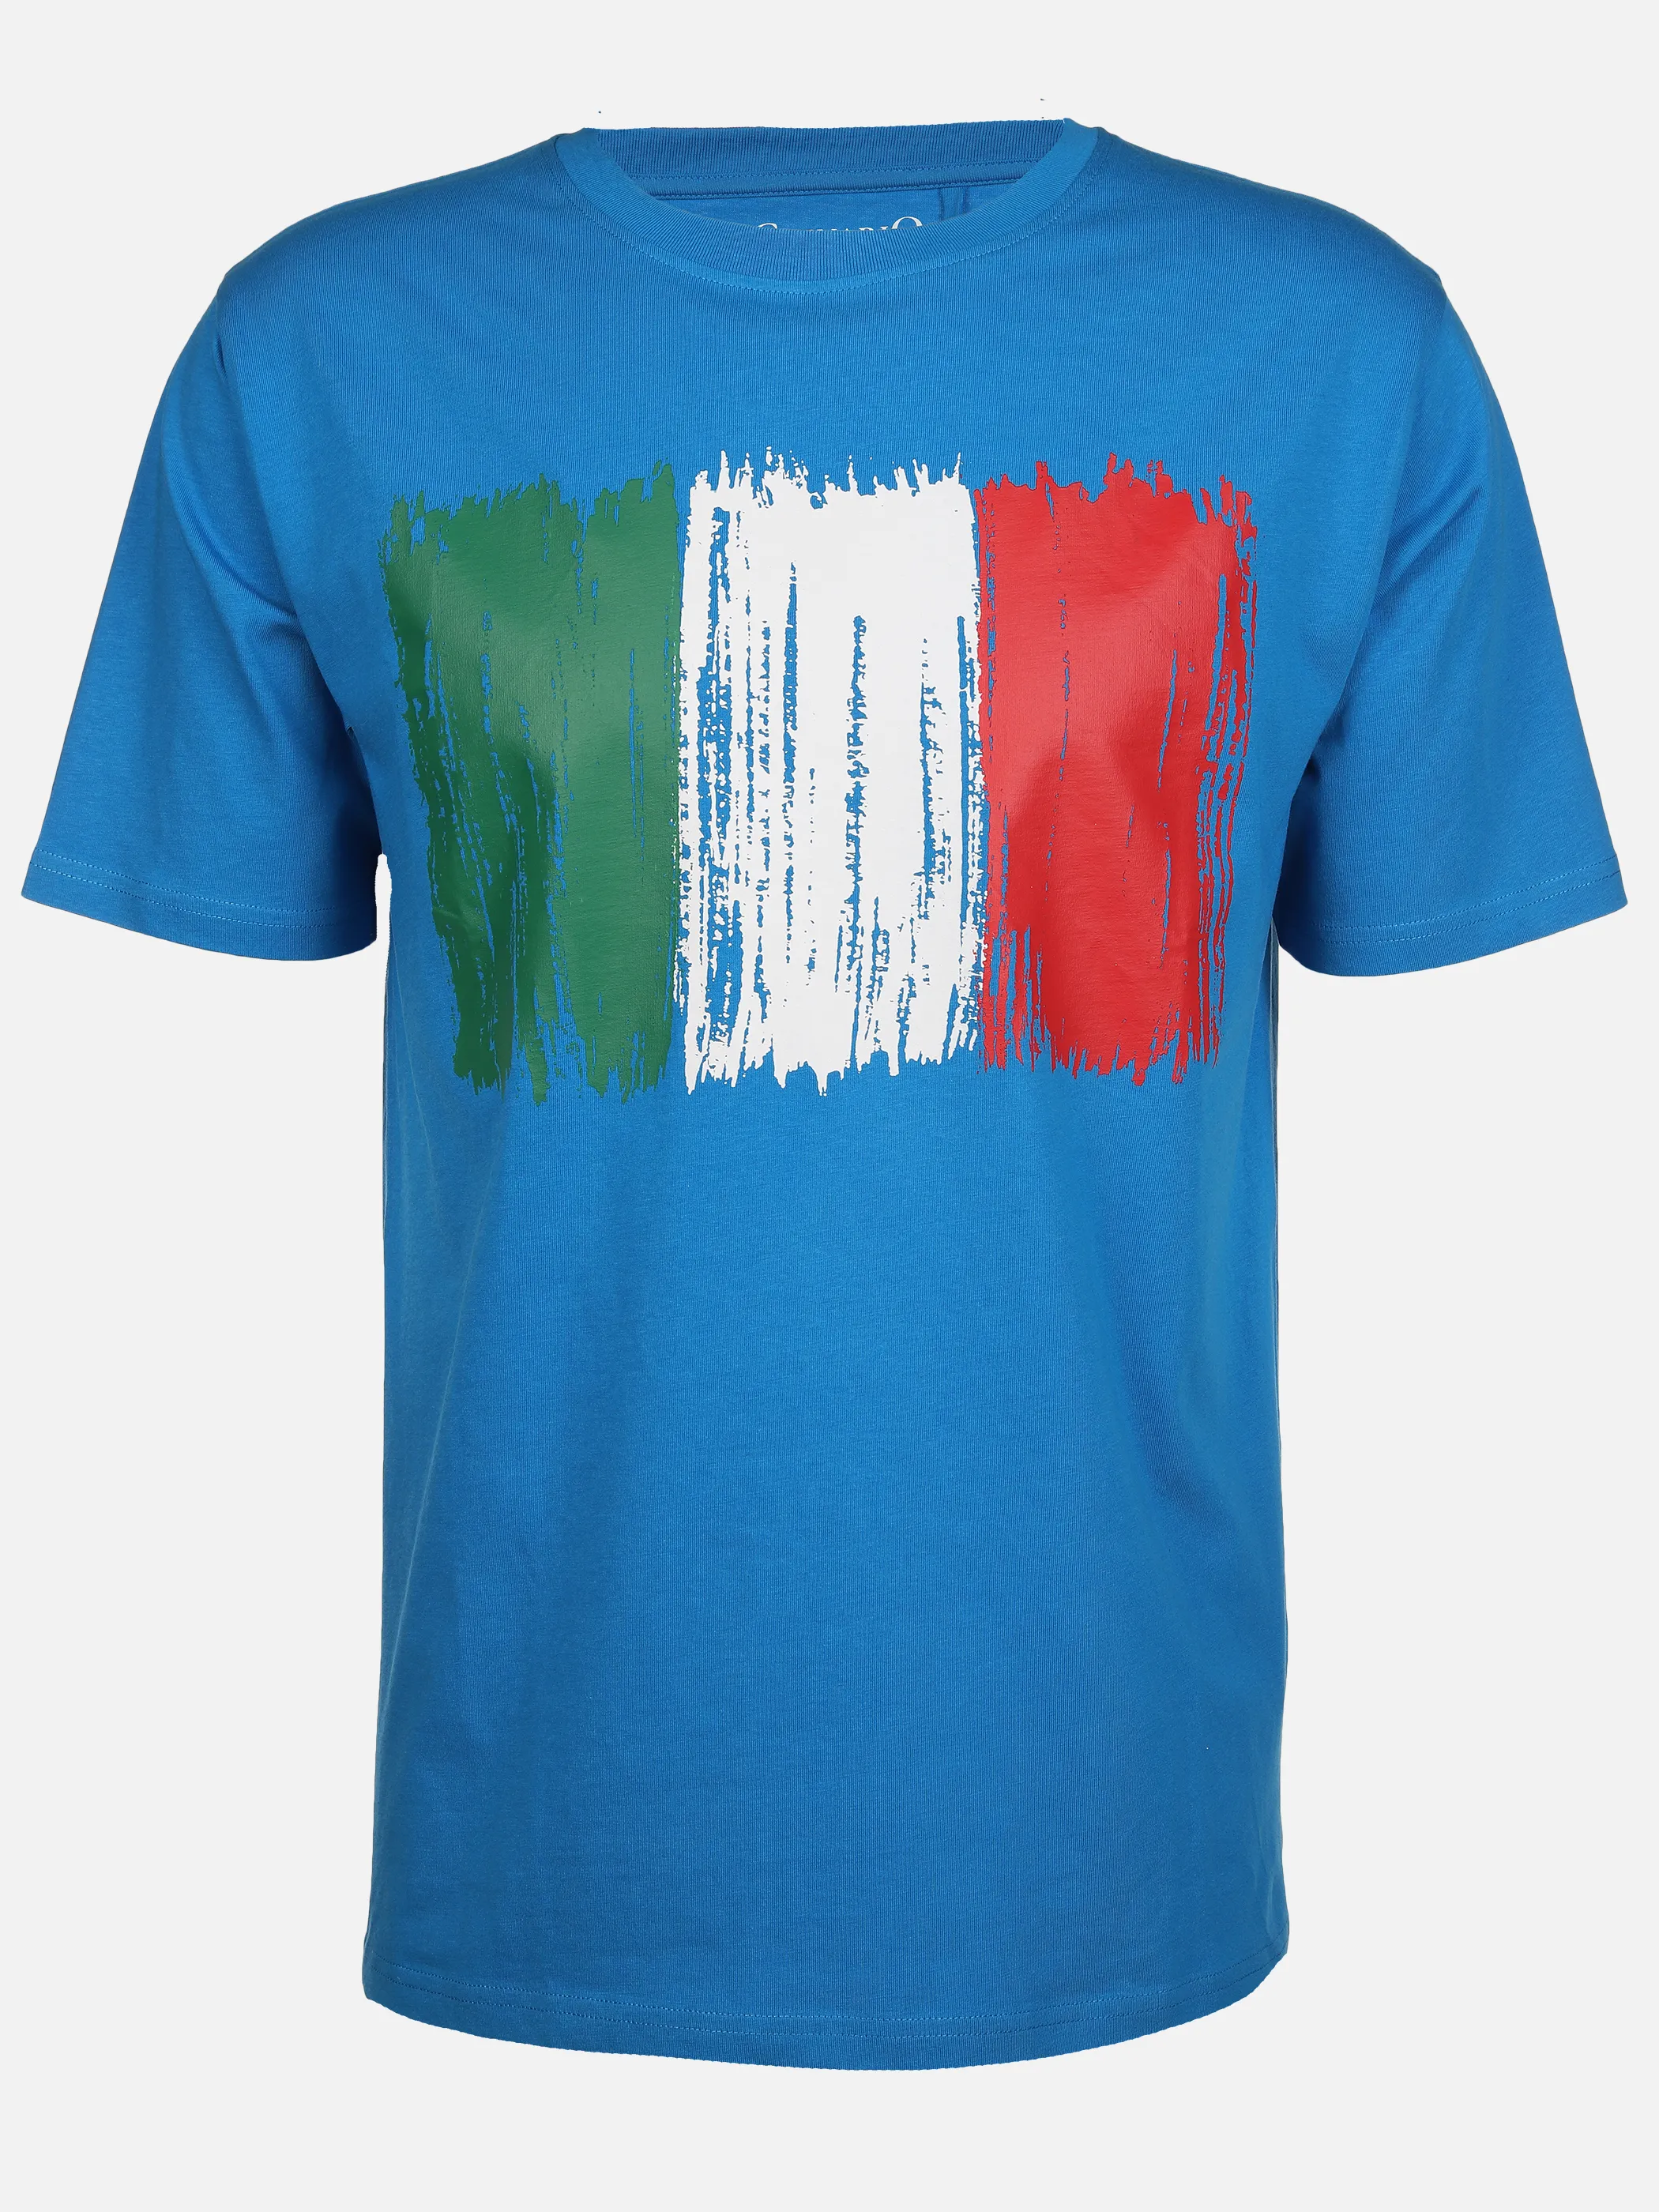 Grinario Sports Unisex T-Shirt EM24 Blau 889225 BLUE 1